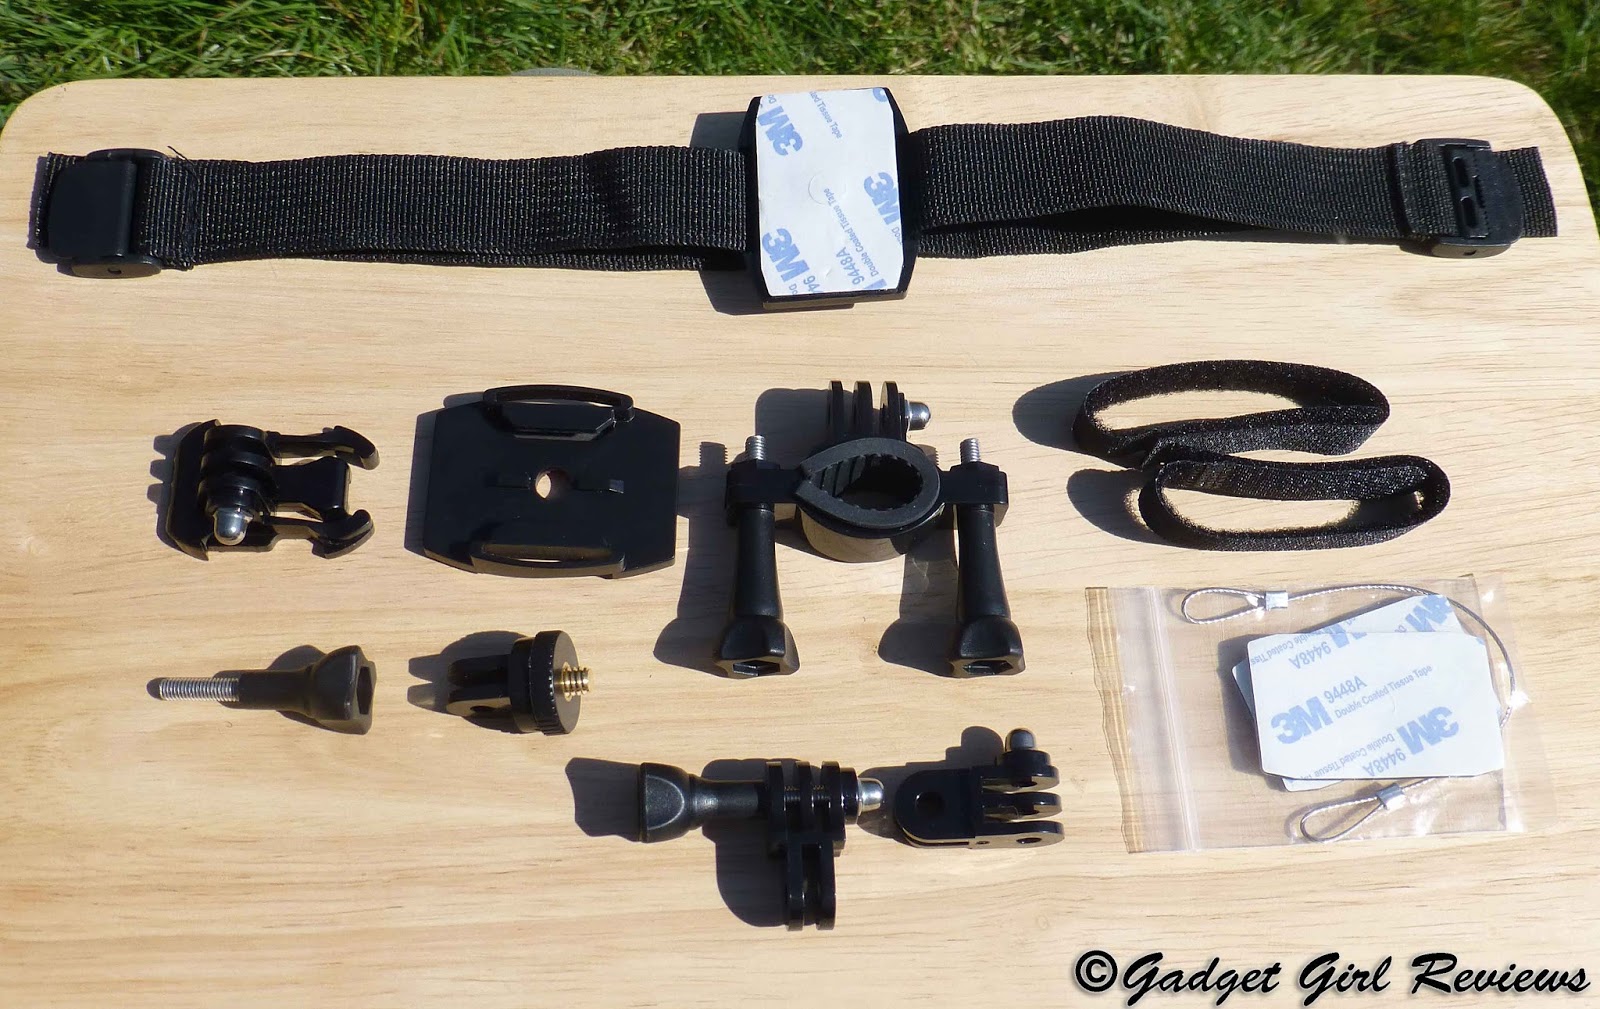 januar opdragelse Moske Gadget Review: KitVision Escape HD5W Waterproof Full HD Action Camera Review